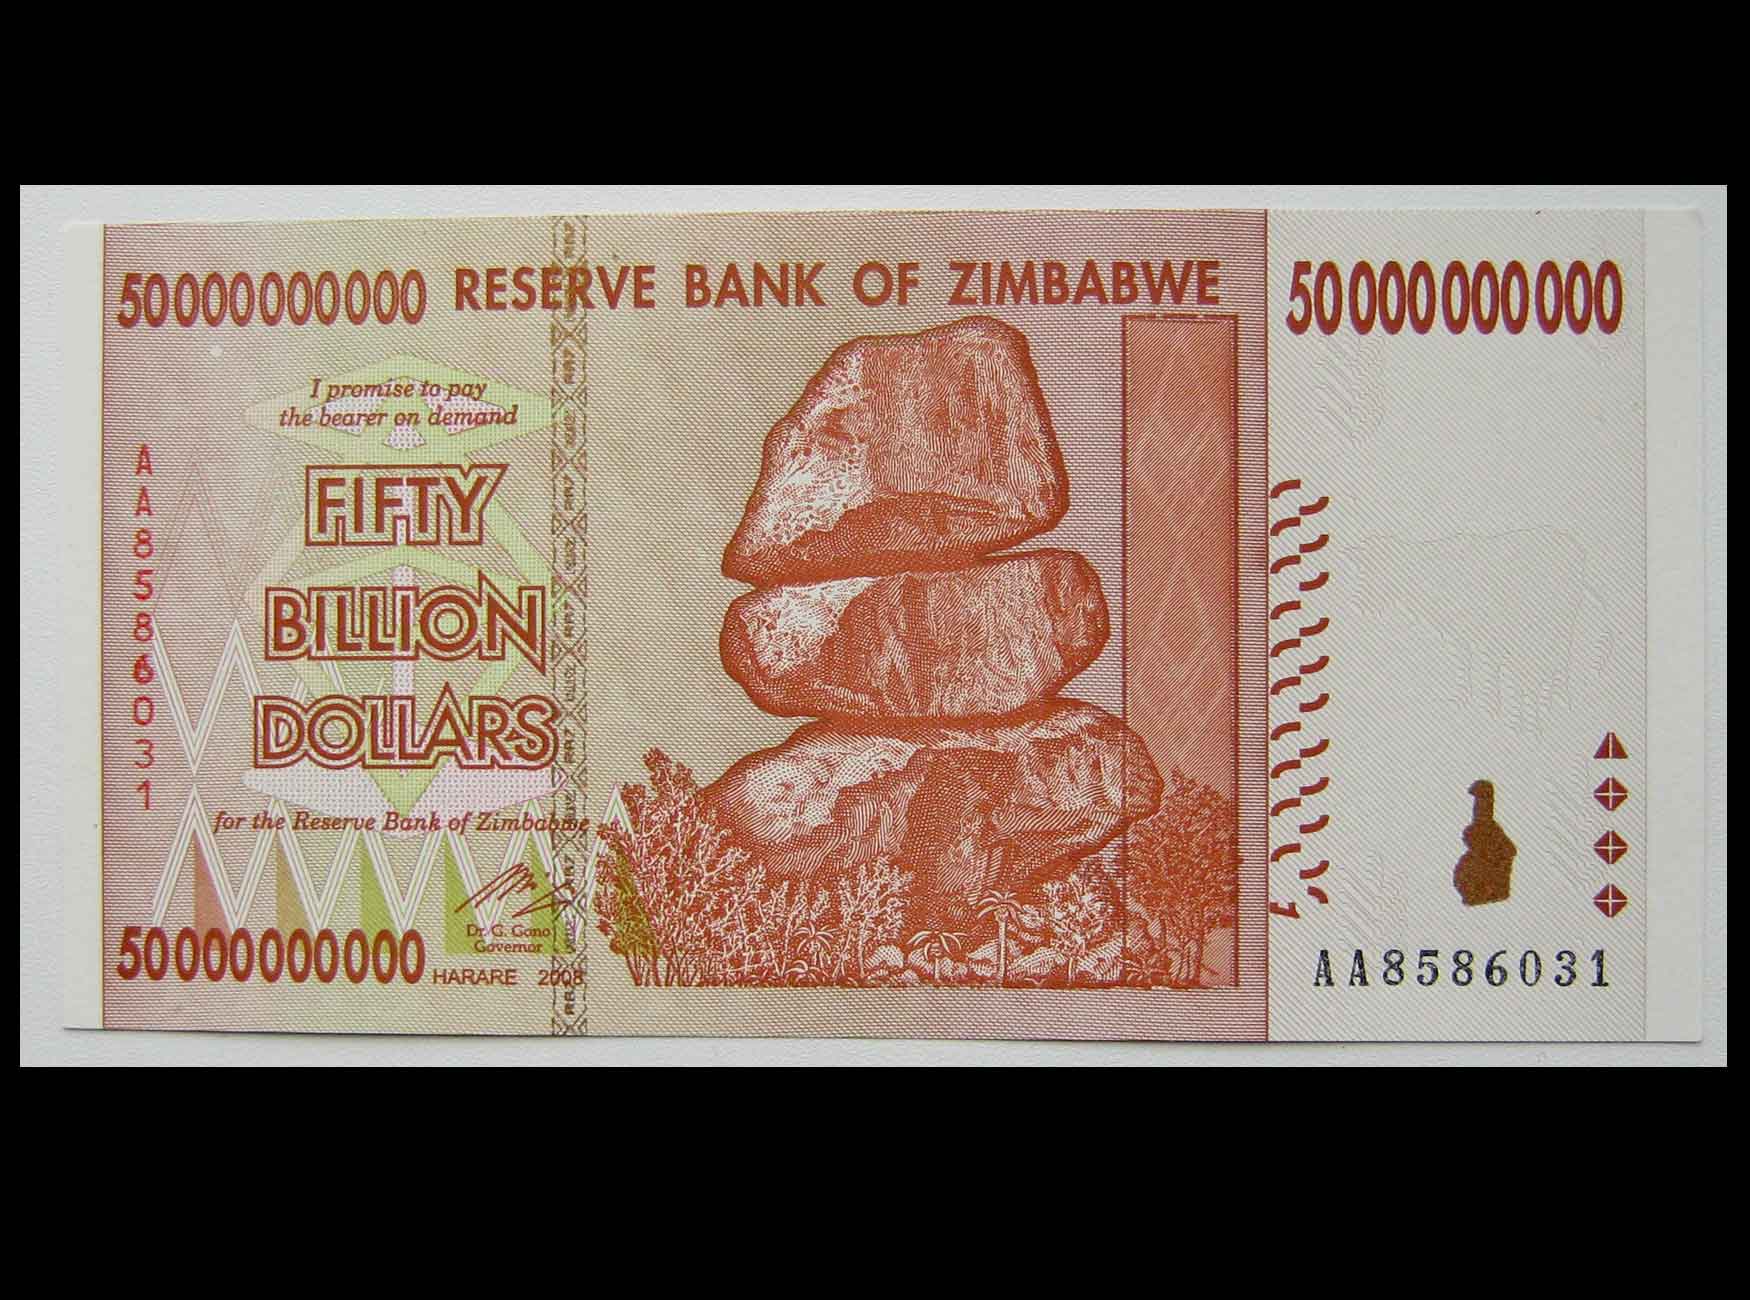 1 млрд зимбабвийских долларов. Зимбабве банкнота 1000000000 долларов. Купюра Зимбабве 100 000 000 000 000 долларов. 50 000 000 000зимбаба долар. Банкнота 10 триллионов долларов 2008 Зимбабве.